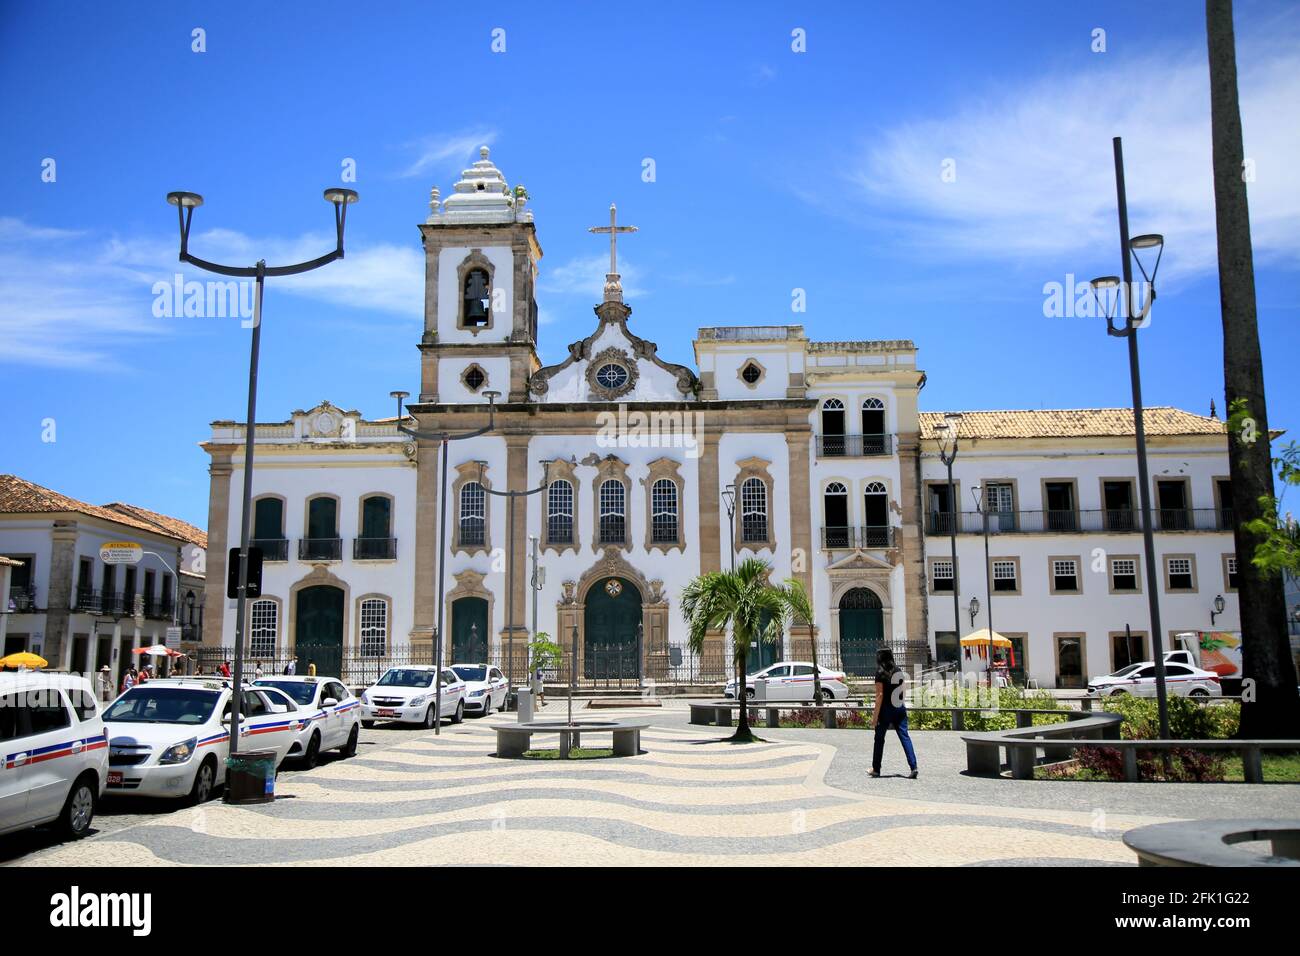 salvador, bahia, brasilien - 10. februar 2021: Blick auf den Platz Terreiro de Jesus in Pelourinhoin der Stadt Salvador. *** Ortsüberschrift *** Stockfoto